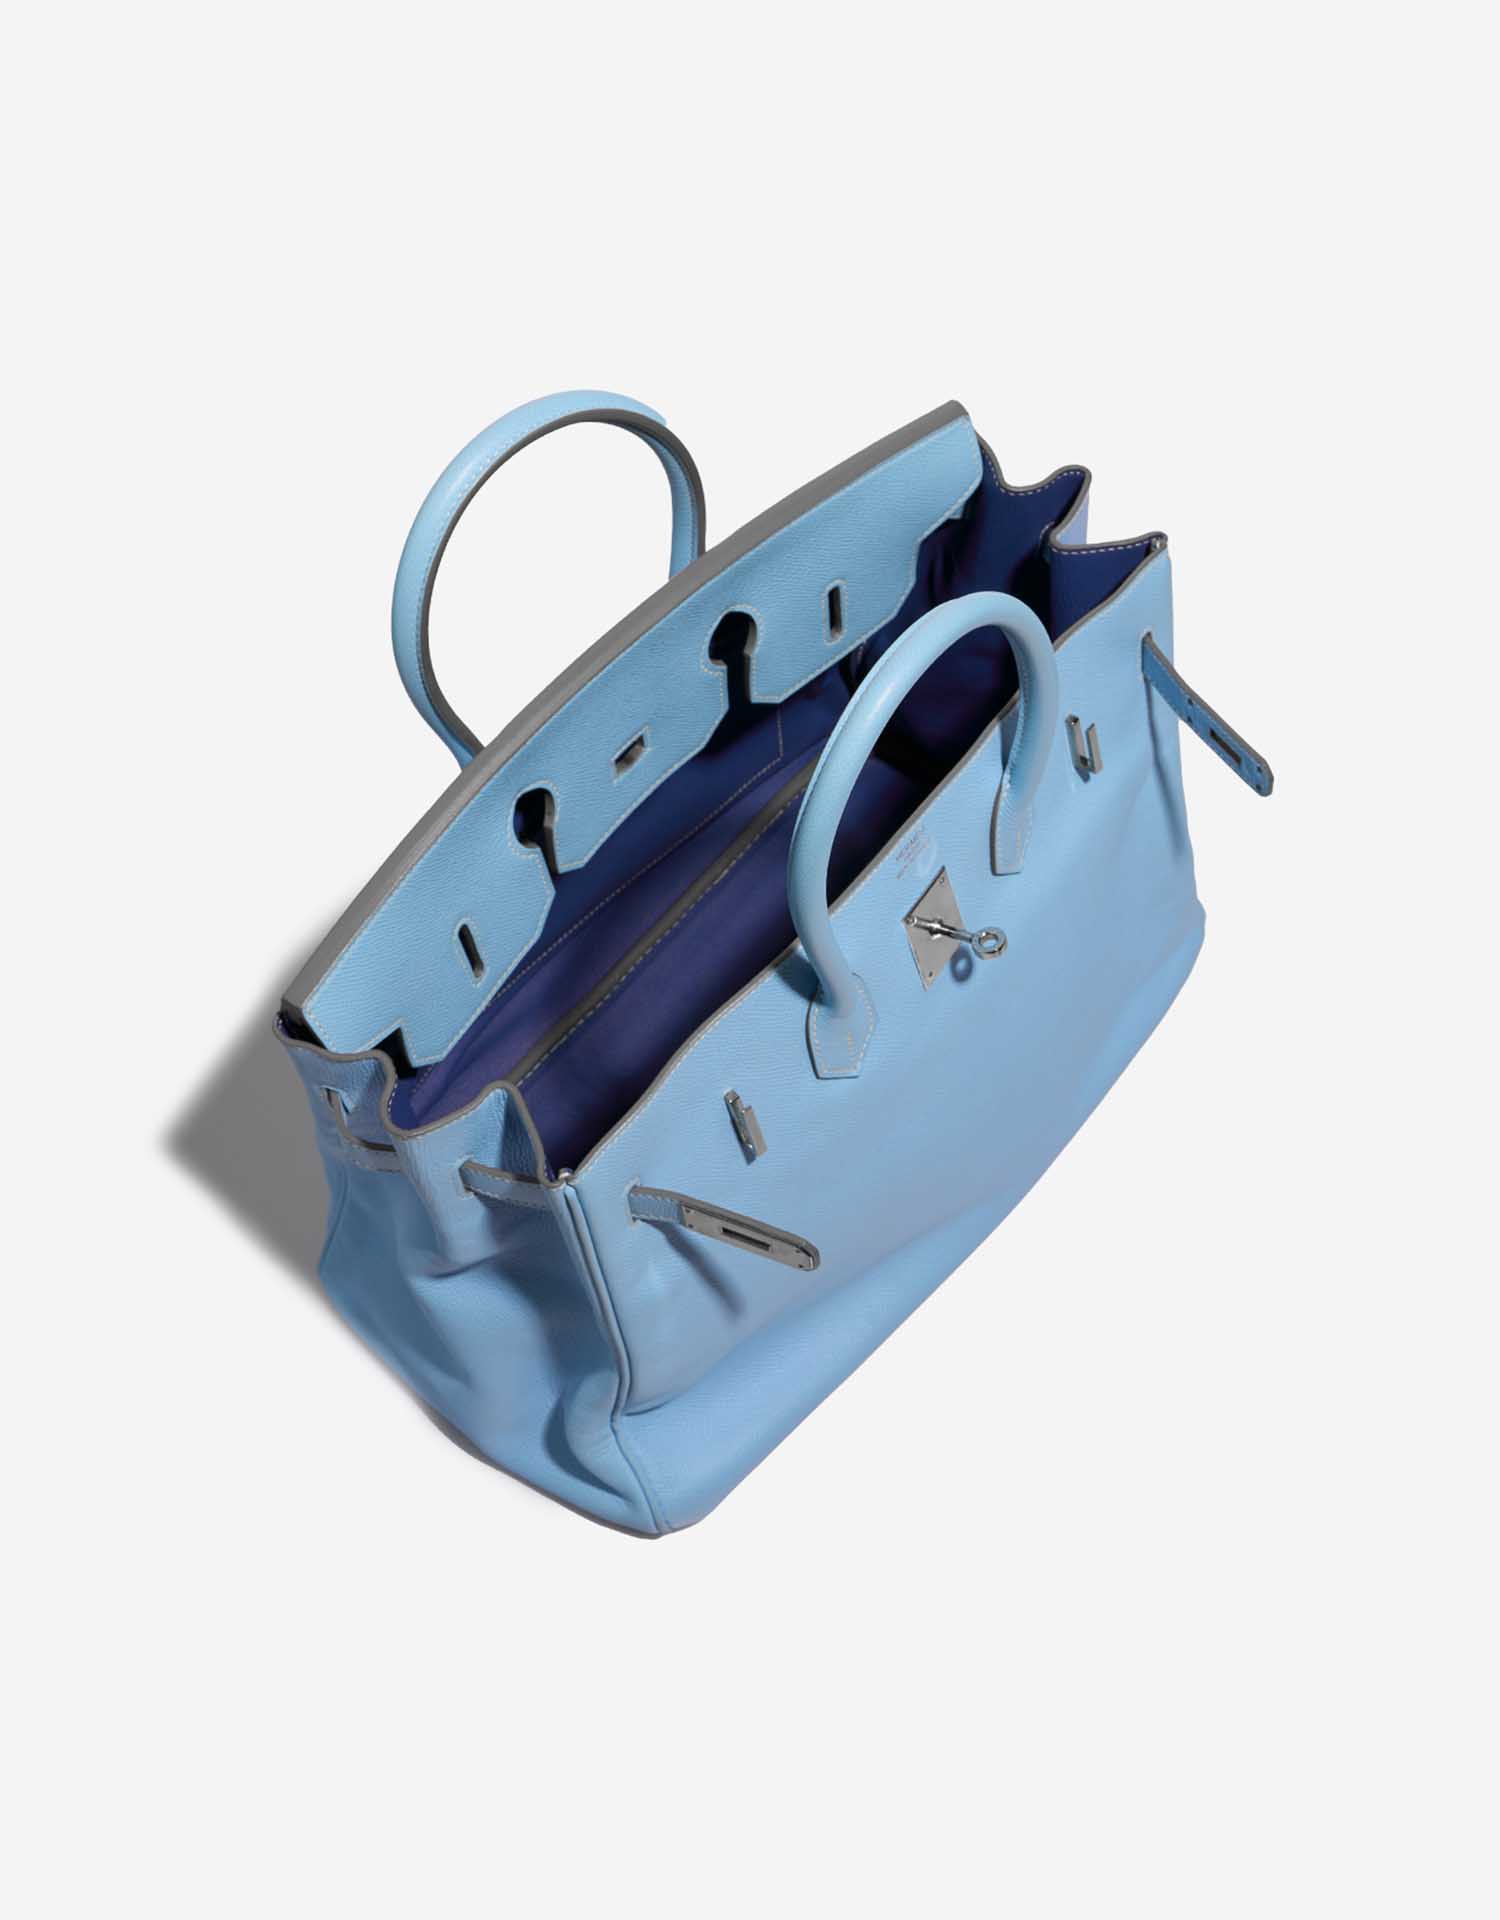 Hermès Birkin Bag 35cm Candy Collection Blue Celeste/Mykonos Epsom w/PHW  2012